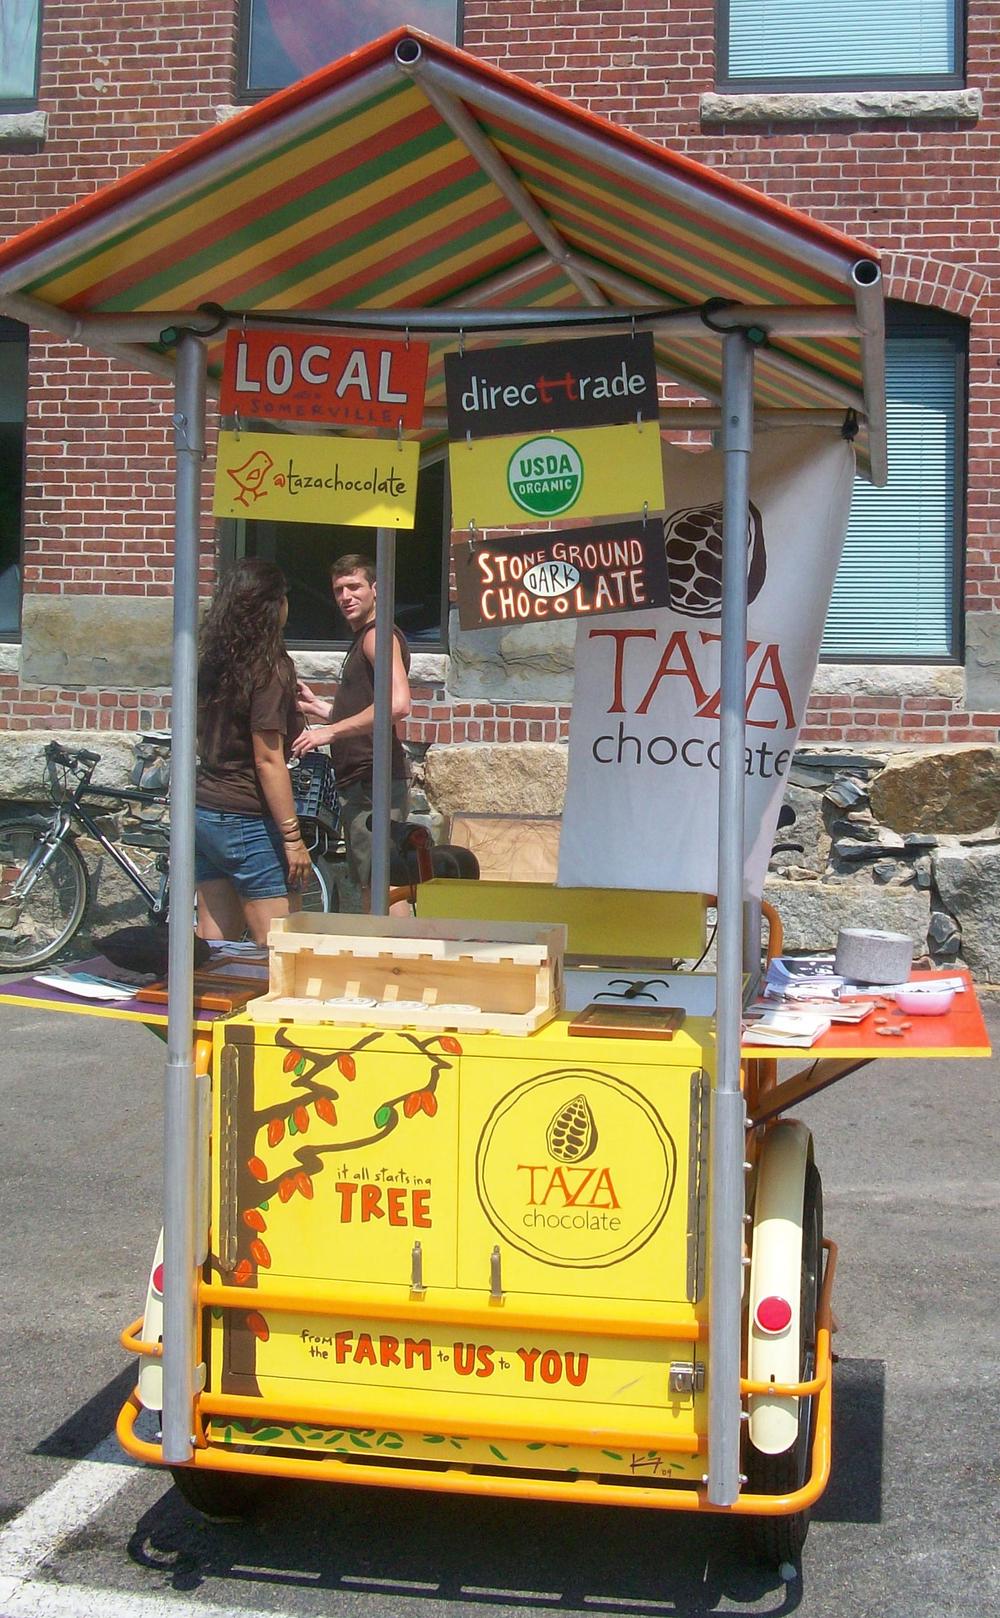 The Taza Chococycle at the Boston Food Truck Festival. (Sarah Knight/WBUR)